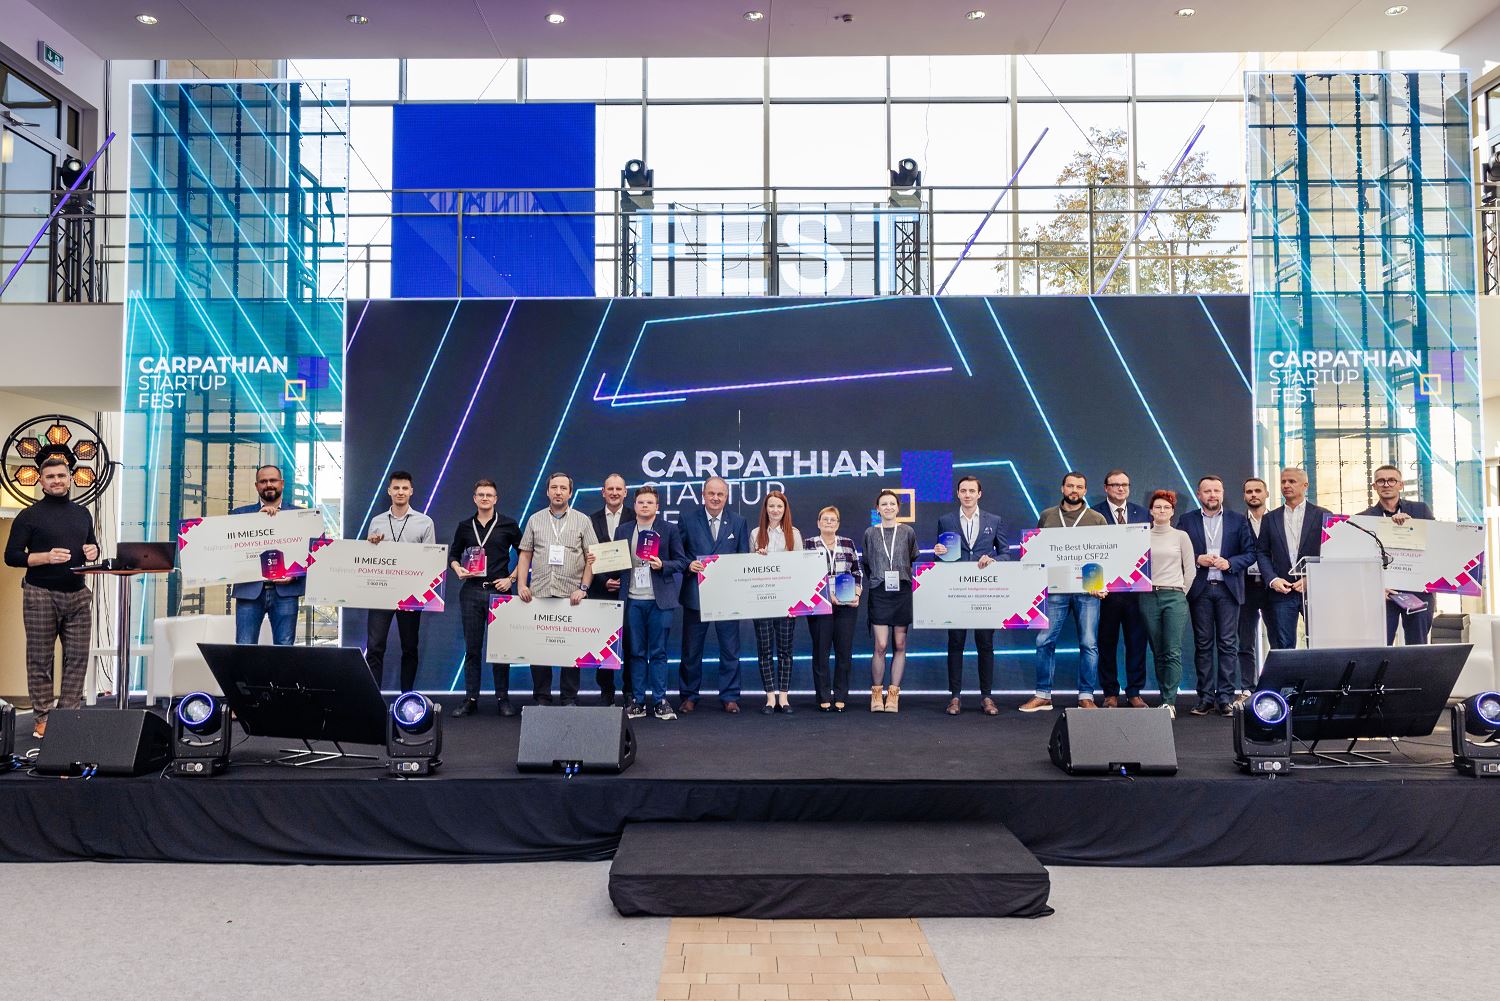 Nagrody Carpathian Startup Fest 2022 rozdane